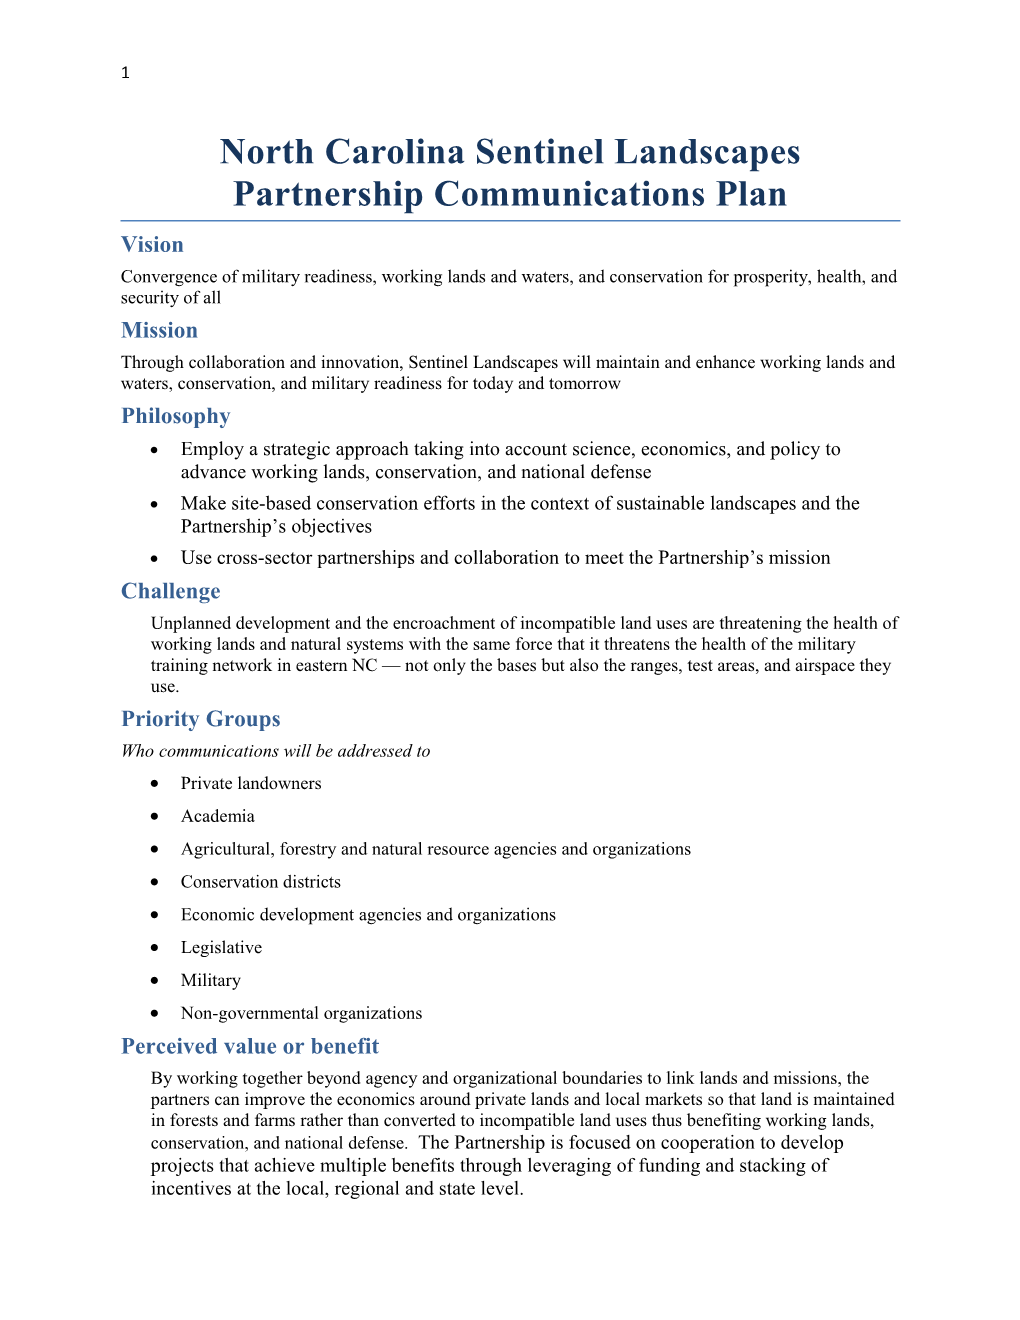 North Carolina Sentinel Landscapes Partnership Communications Plan